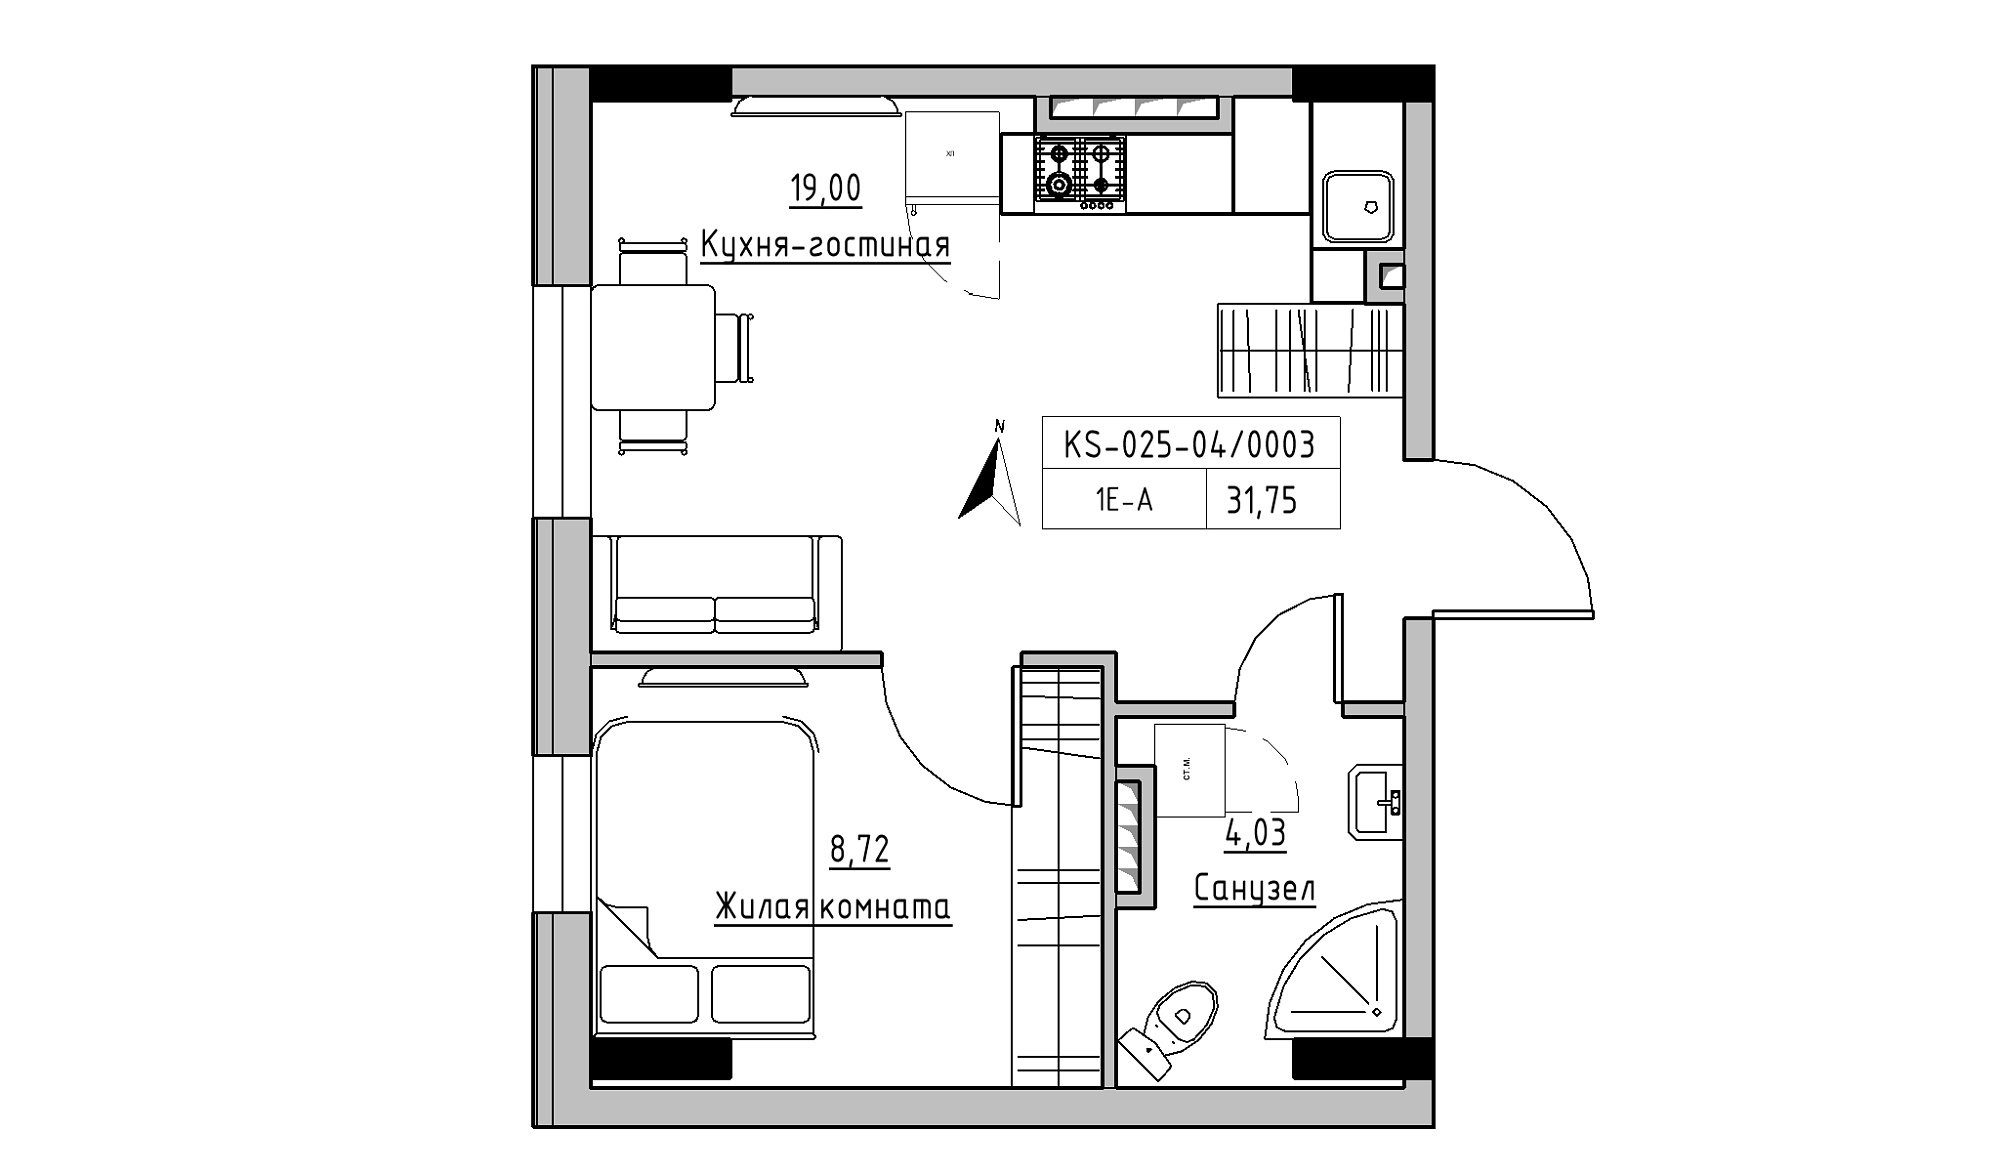 Planning 1-rm flats area 31.75m2, KS-025-04/0003.